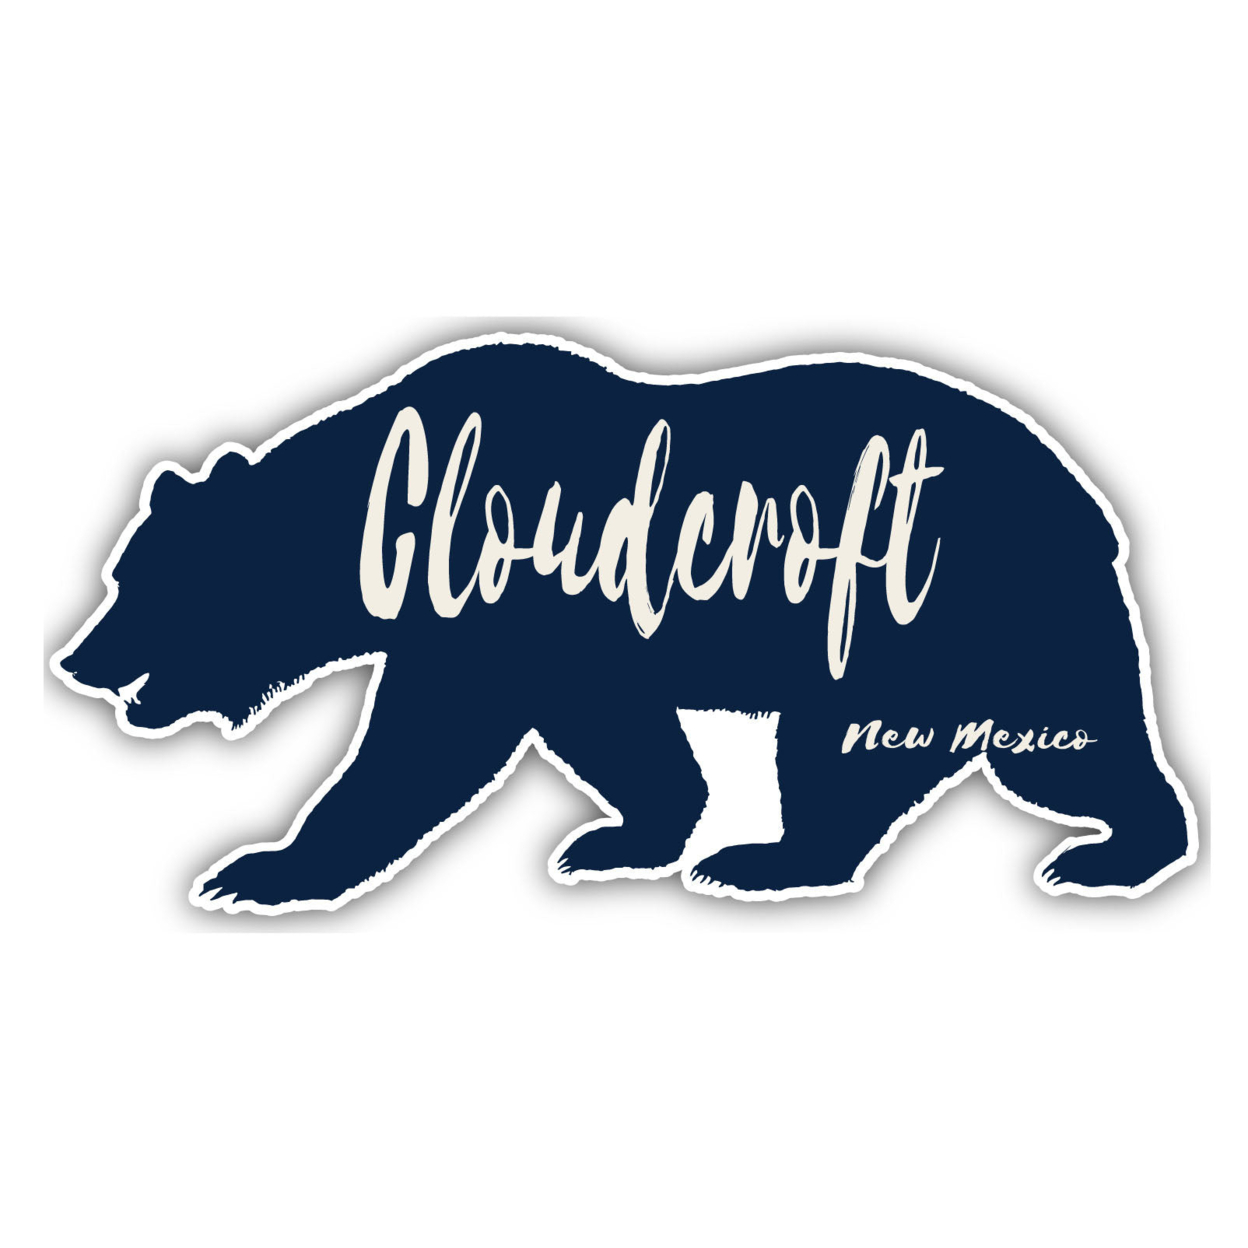 Cloudcroft New Mexico Souvenir Decorative Stickers (Choose Theme And Size) - Single Unit, 2-Inch, Adventures Awaits